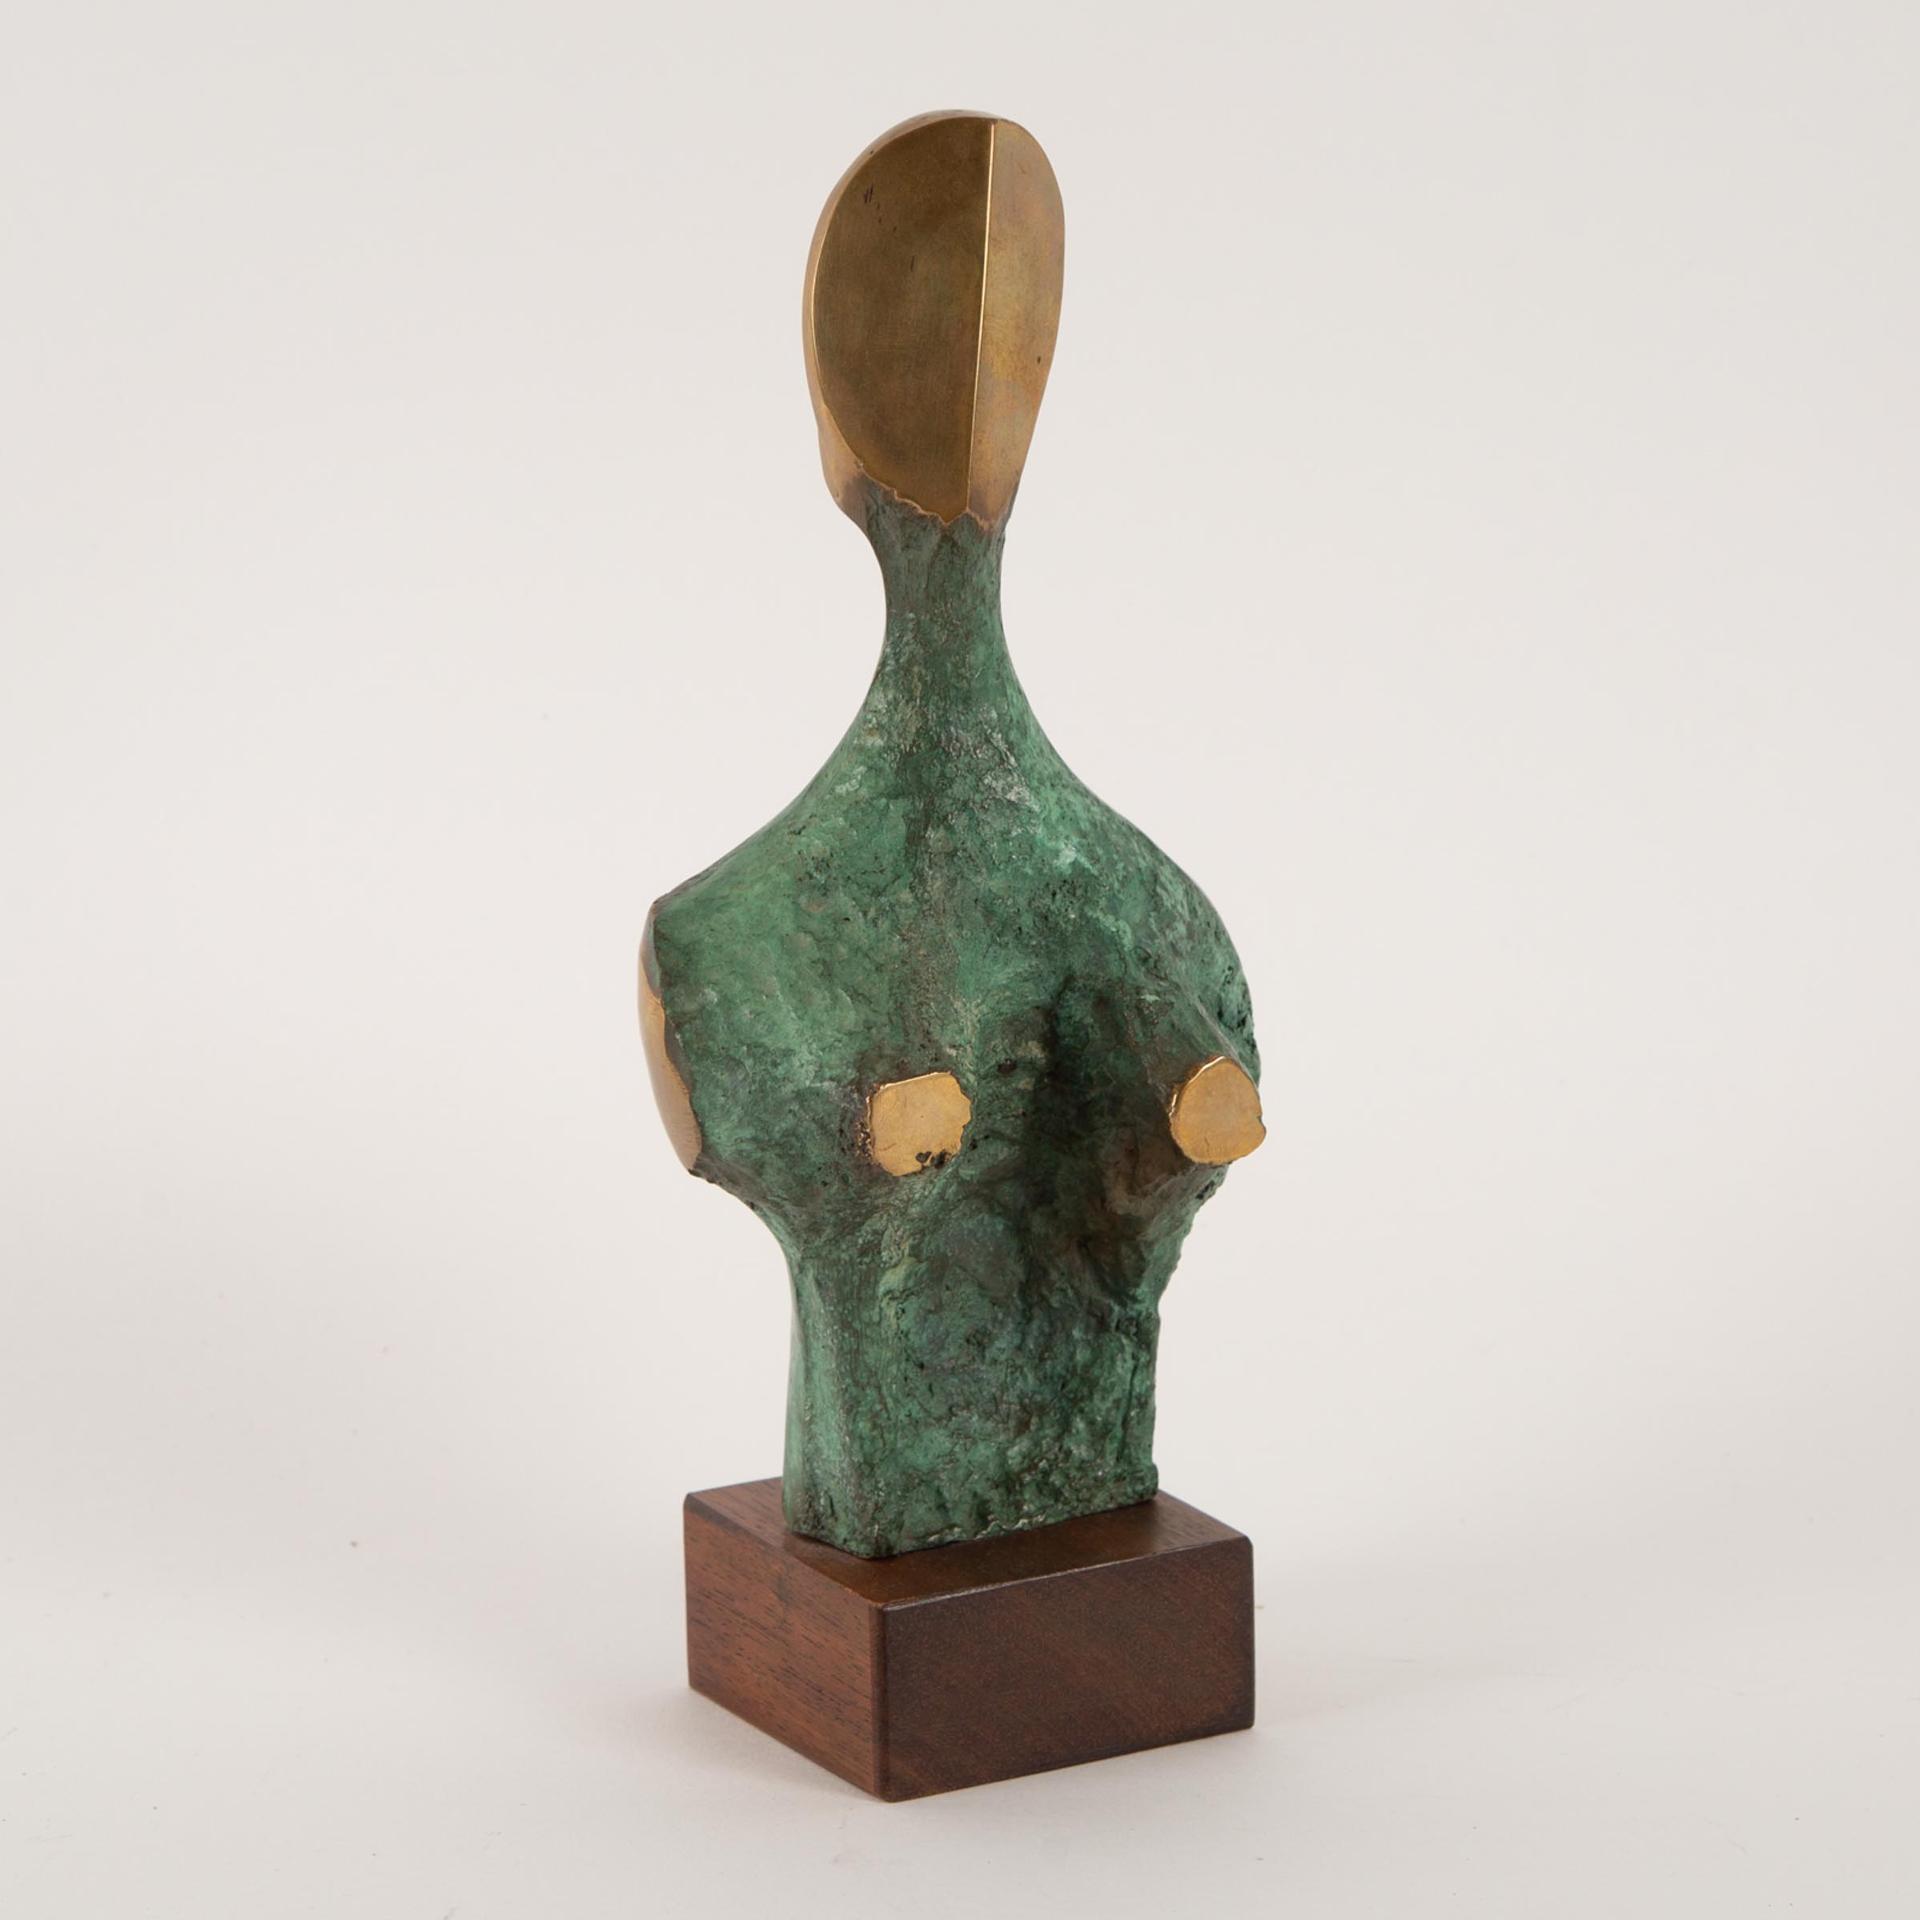 Antonio Grediaga Kieff (1936) - Untitled (Abstract Form)